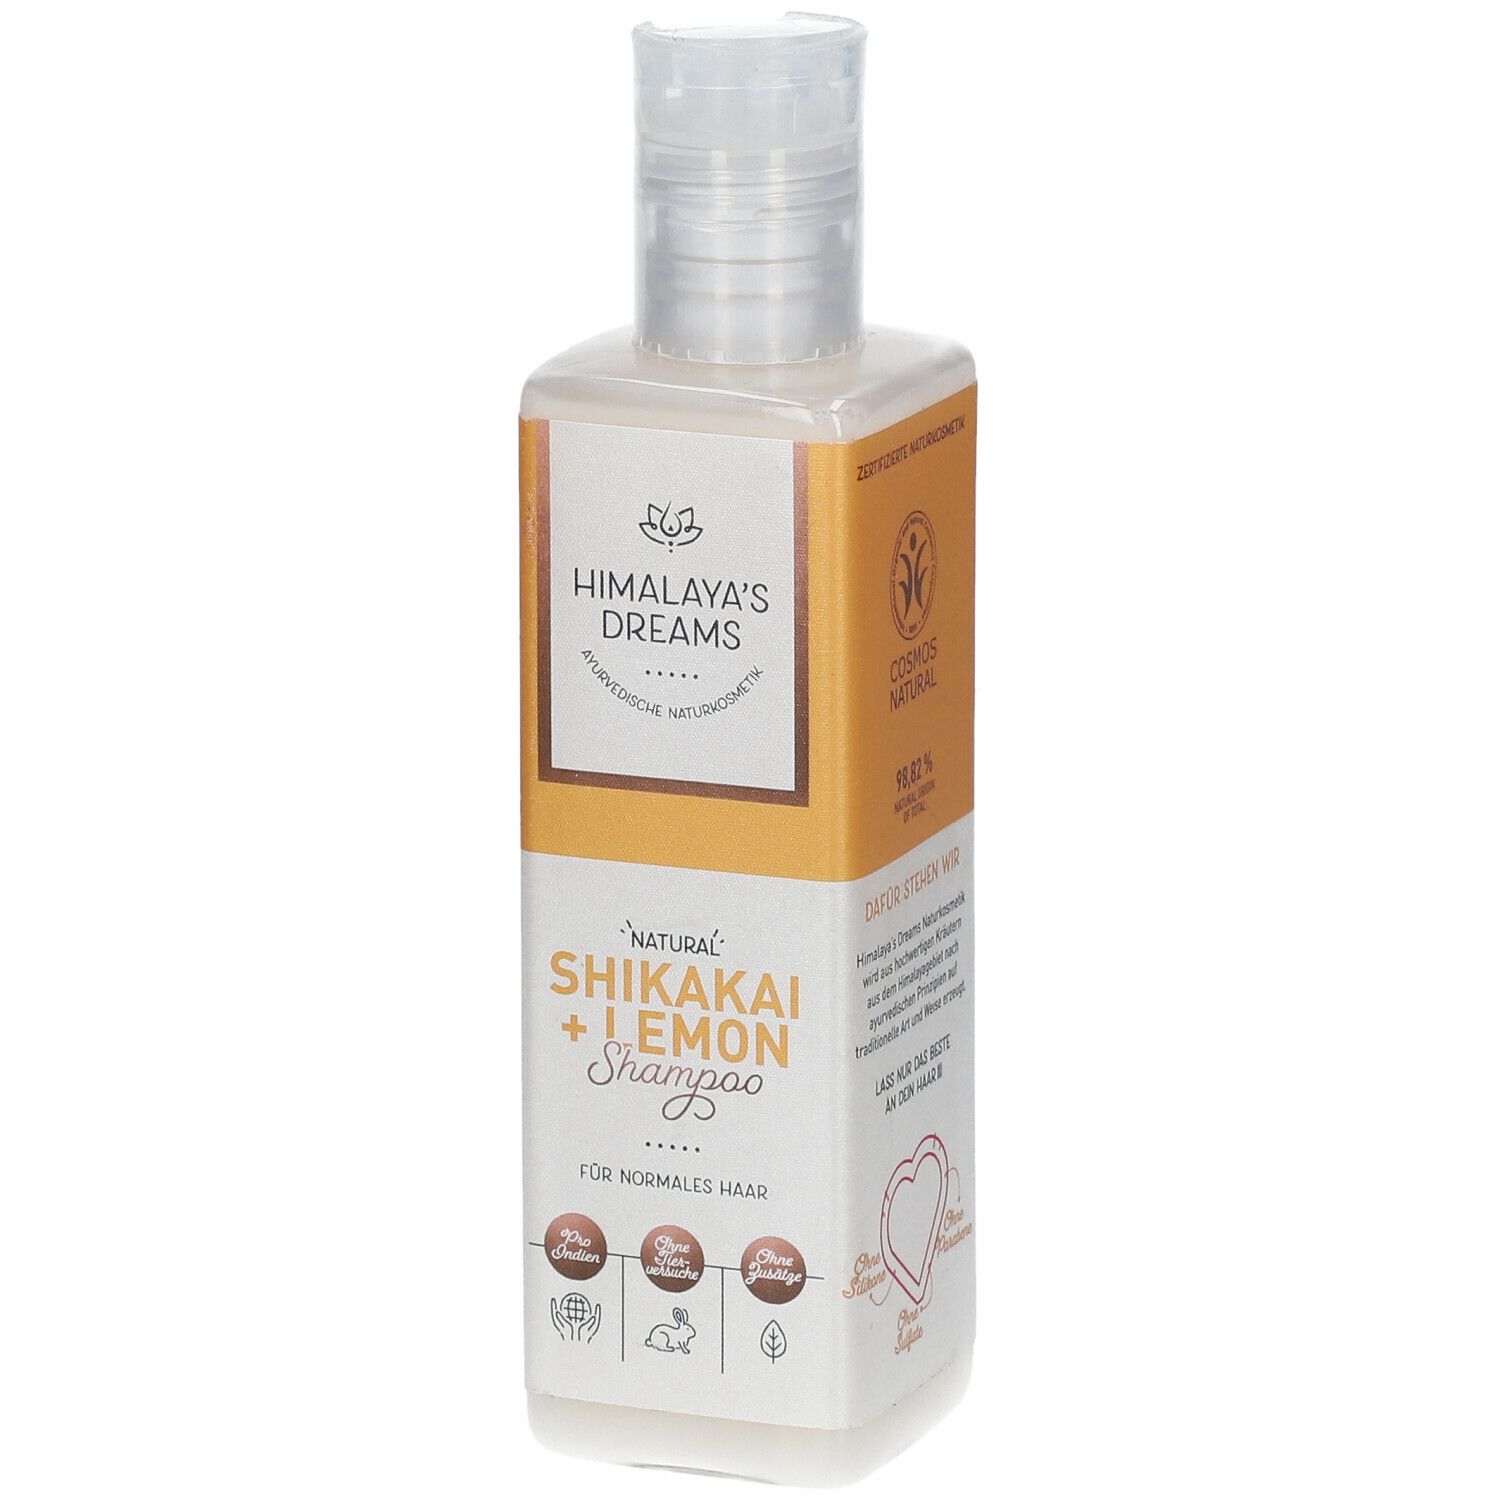 HIMALAYA'S DREAMS NATURAL SHIKAKAI + LEMON Shampoo